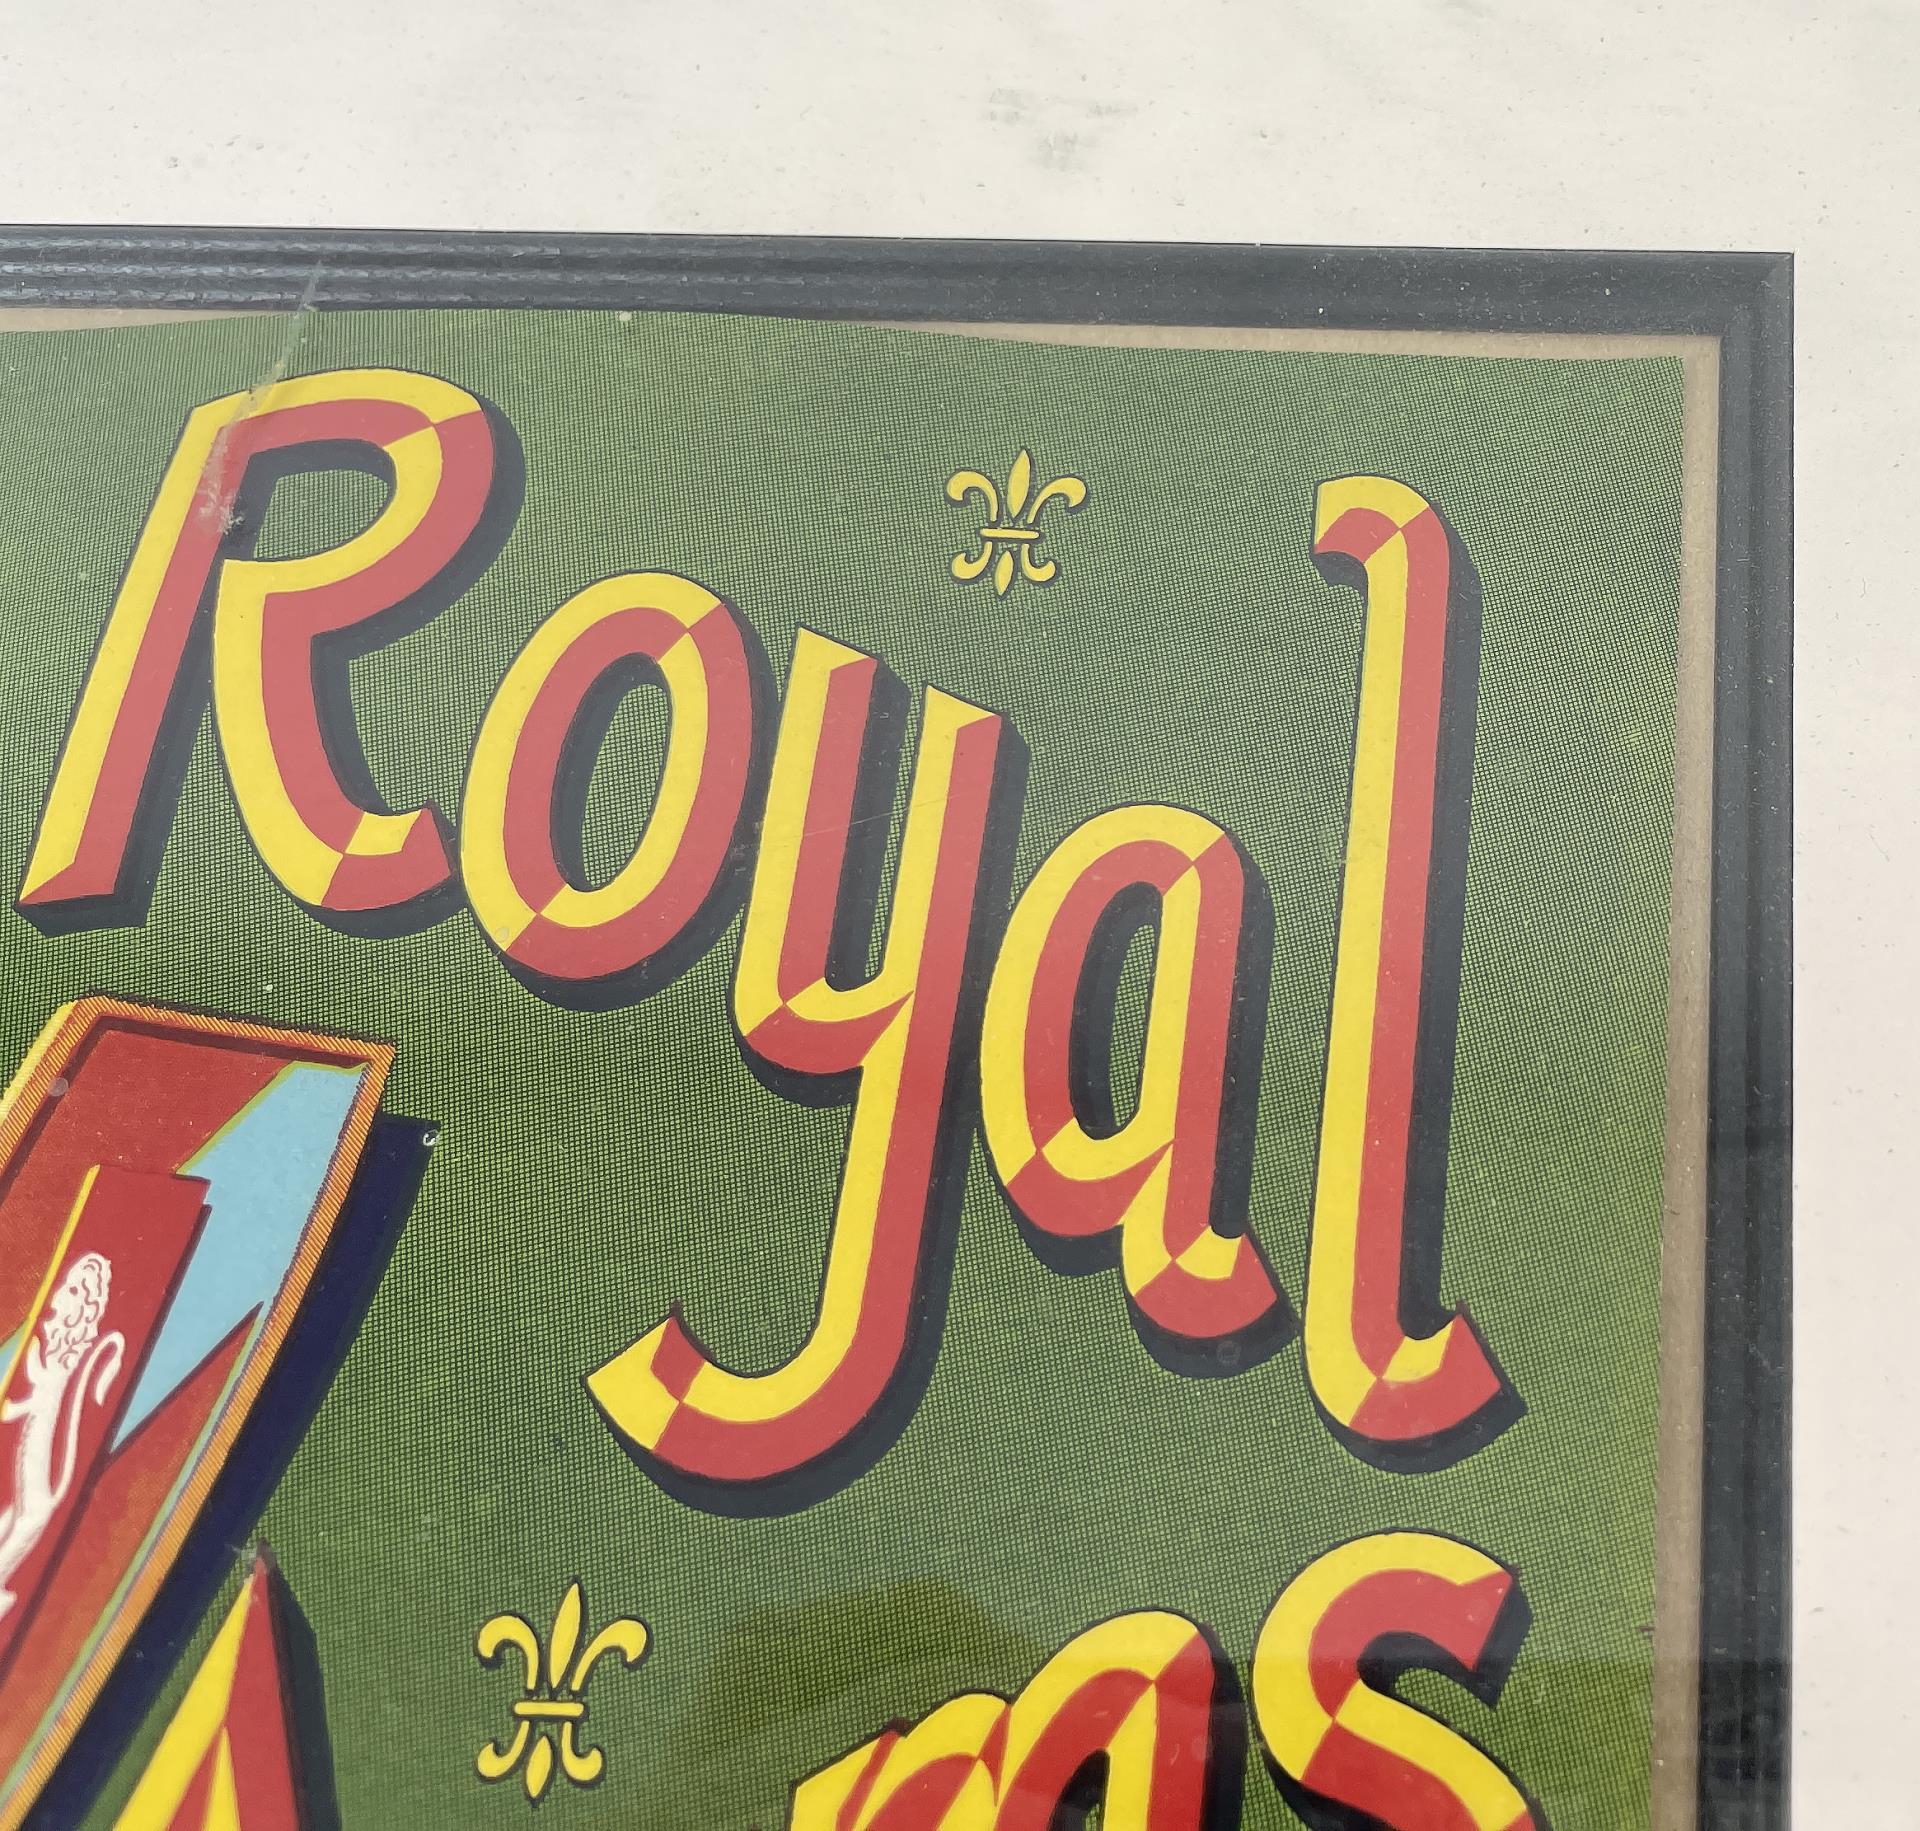 Royal Arms Brand Fruit Box Label